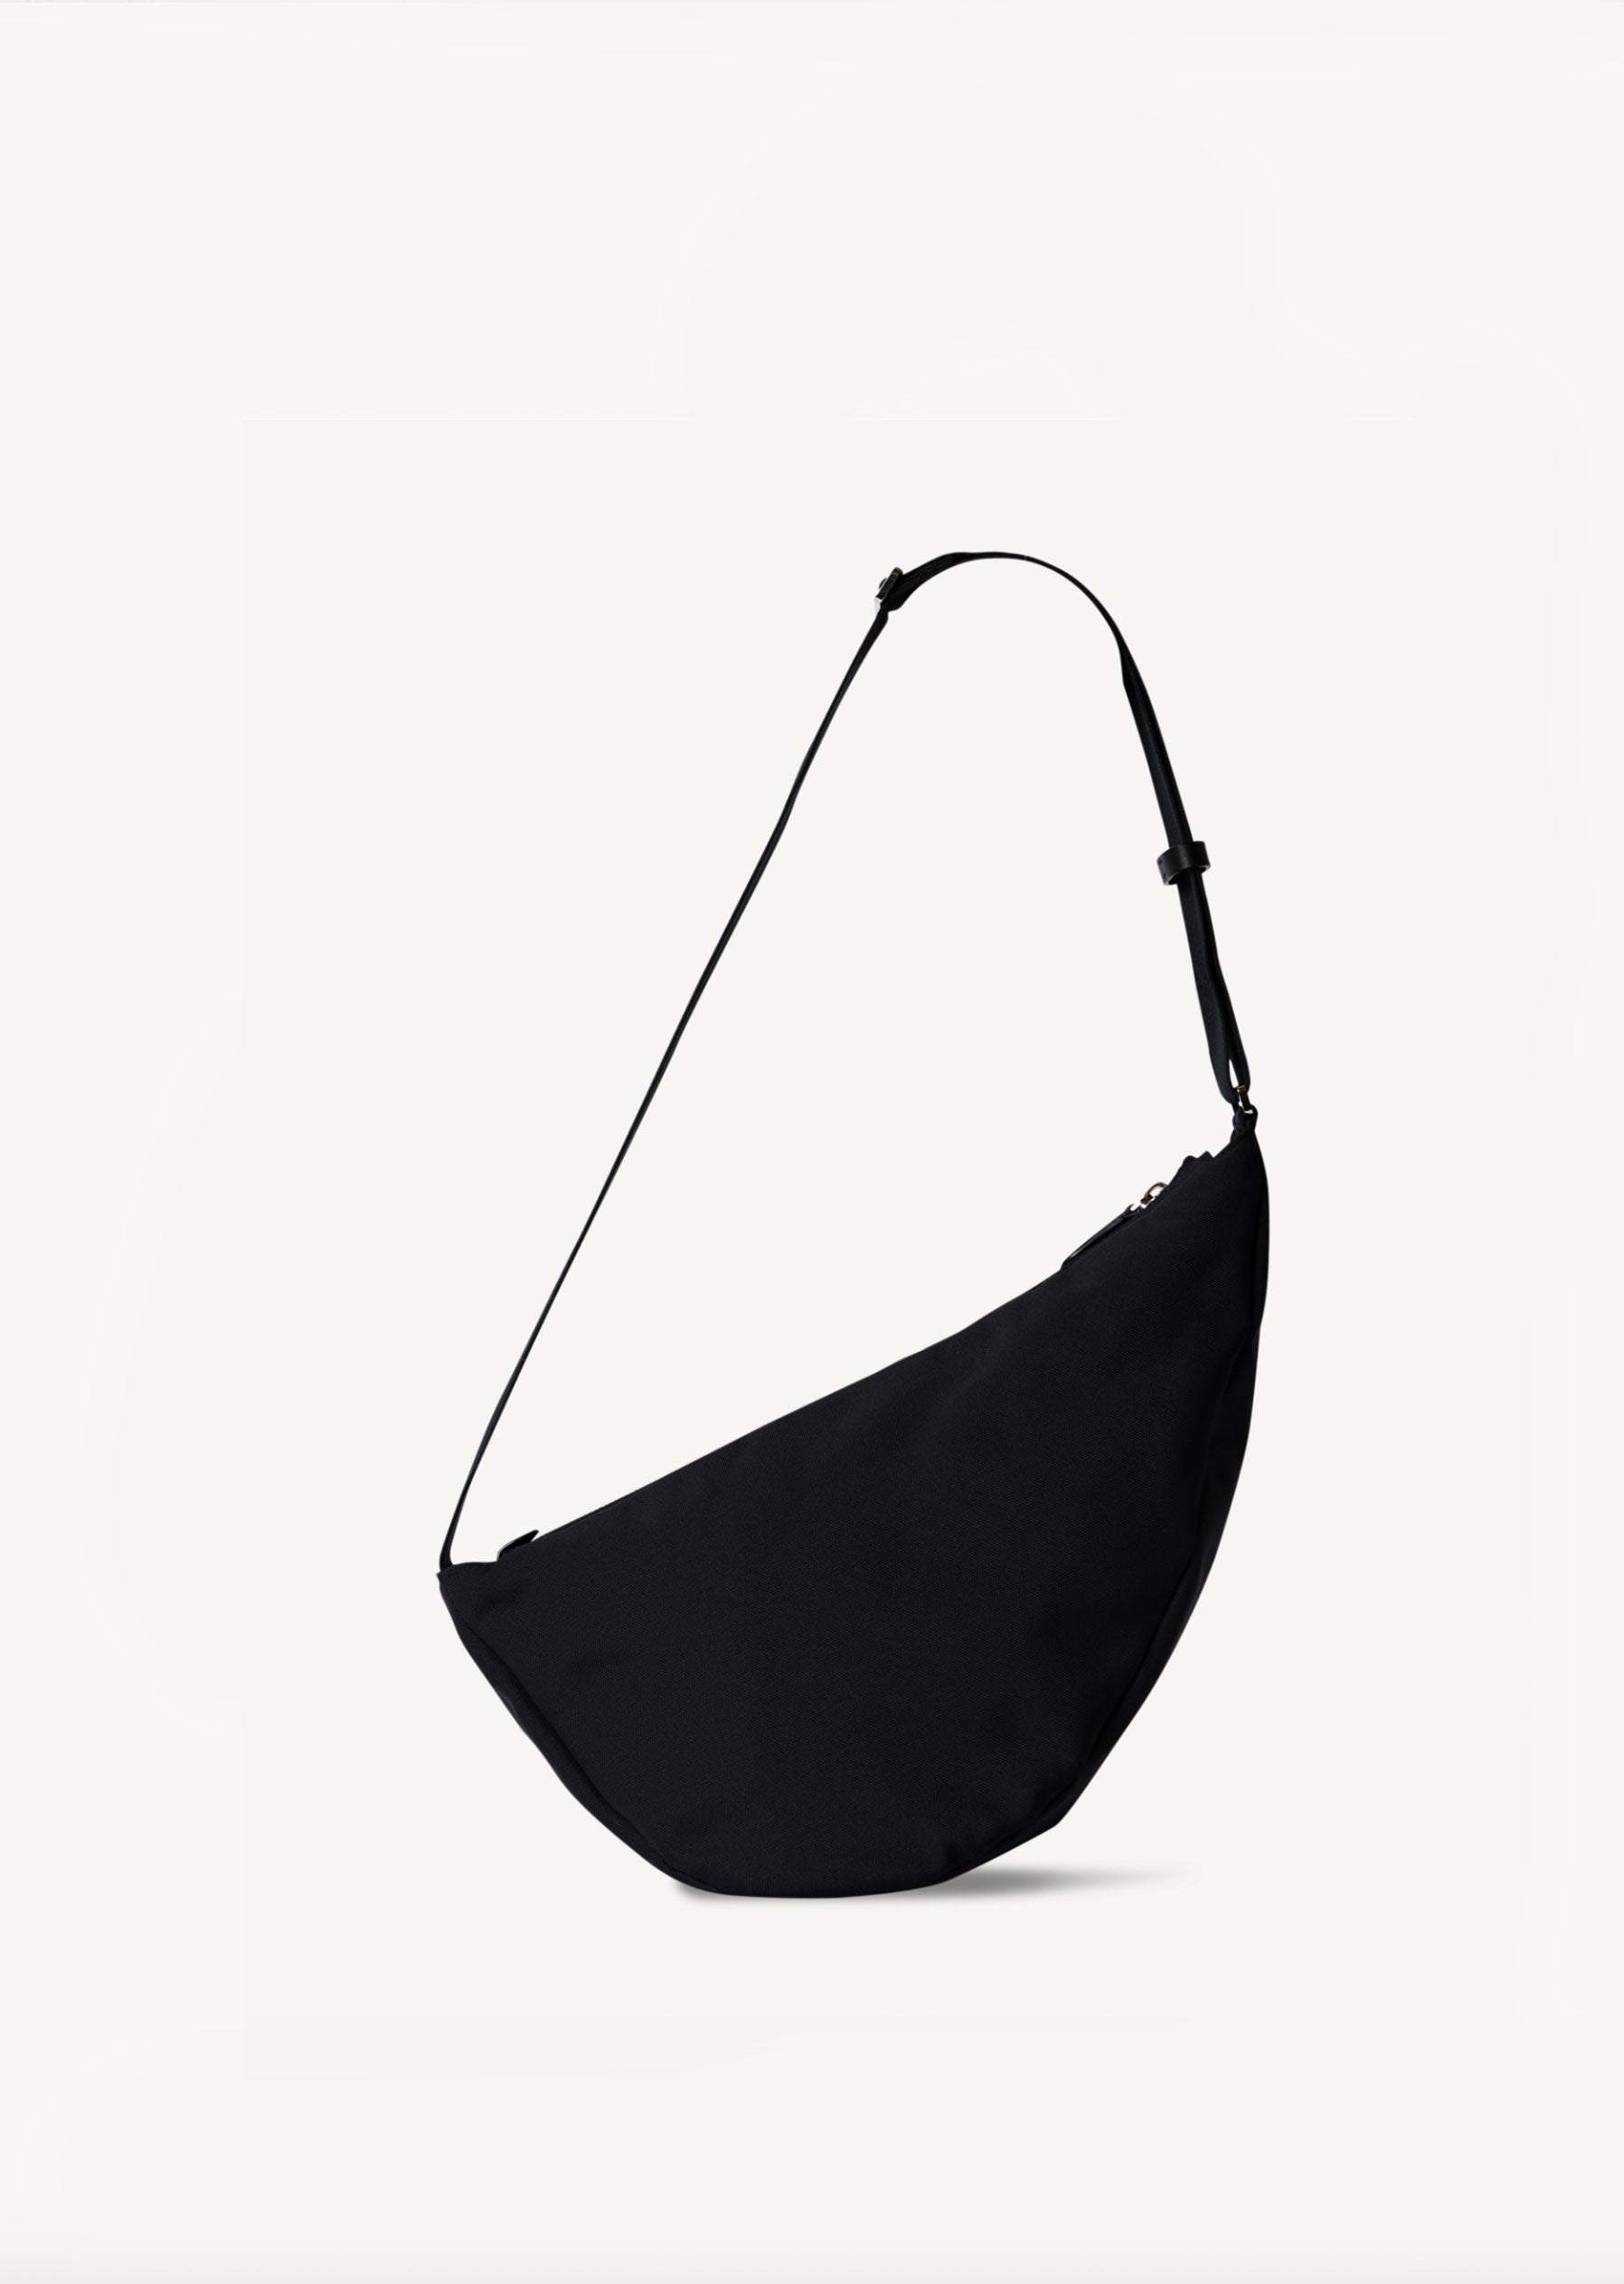 MPROW Banana - Black Leather Large Slouchy Banana Bag | Curved Crossbody Bag